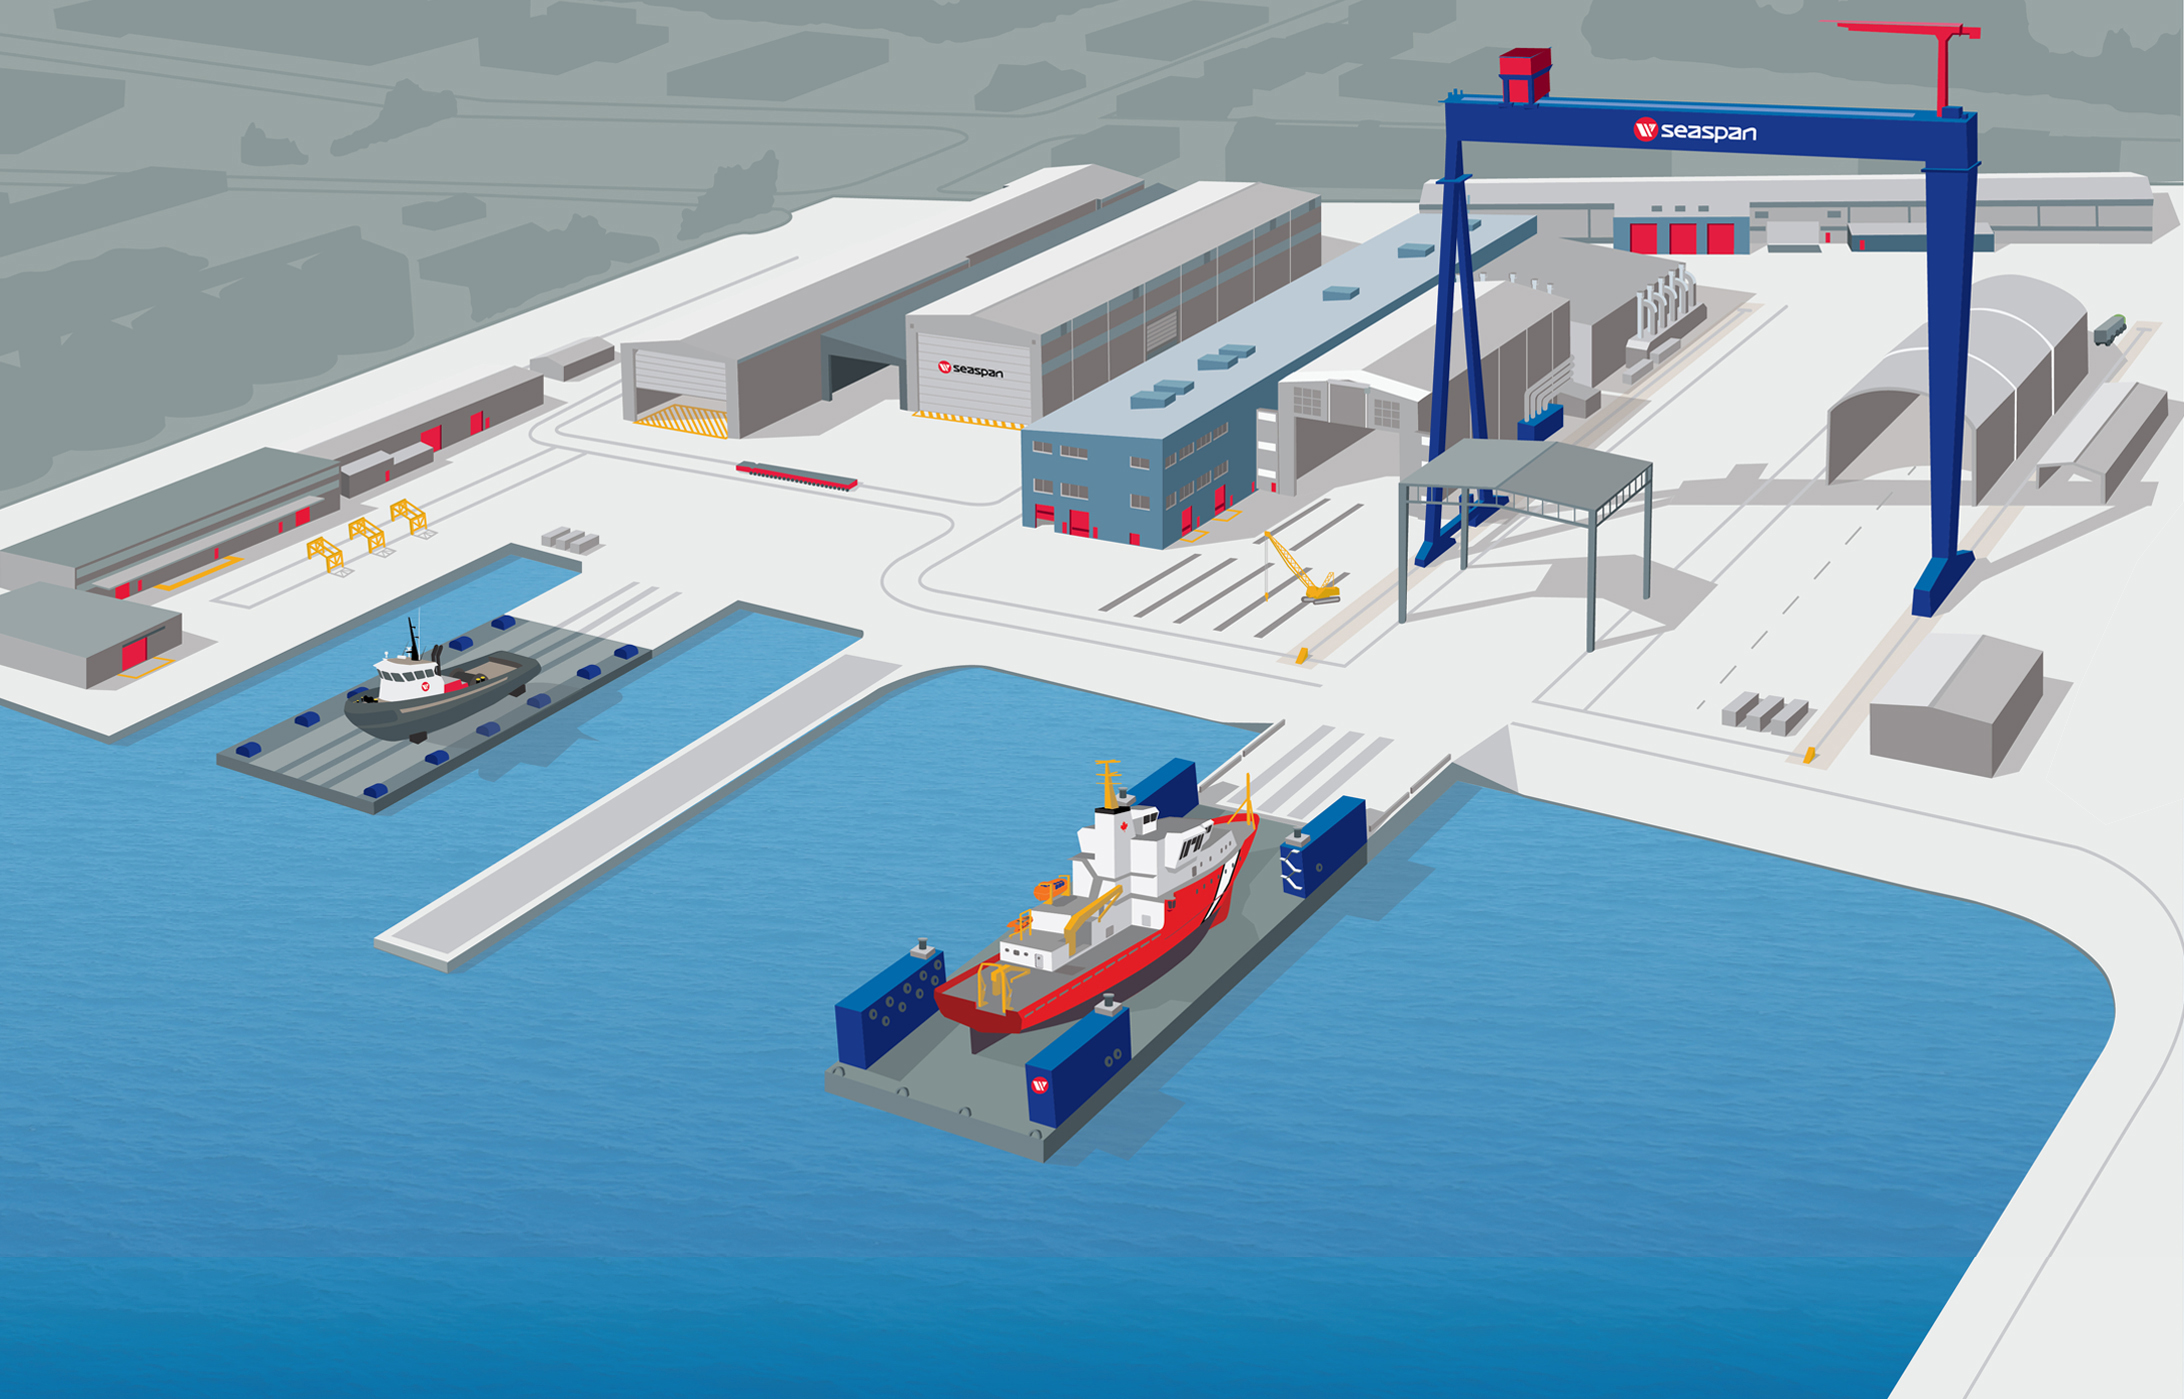 Seaspan Ship Yard Illustration